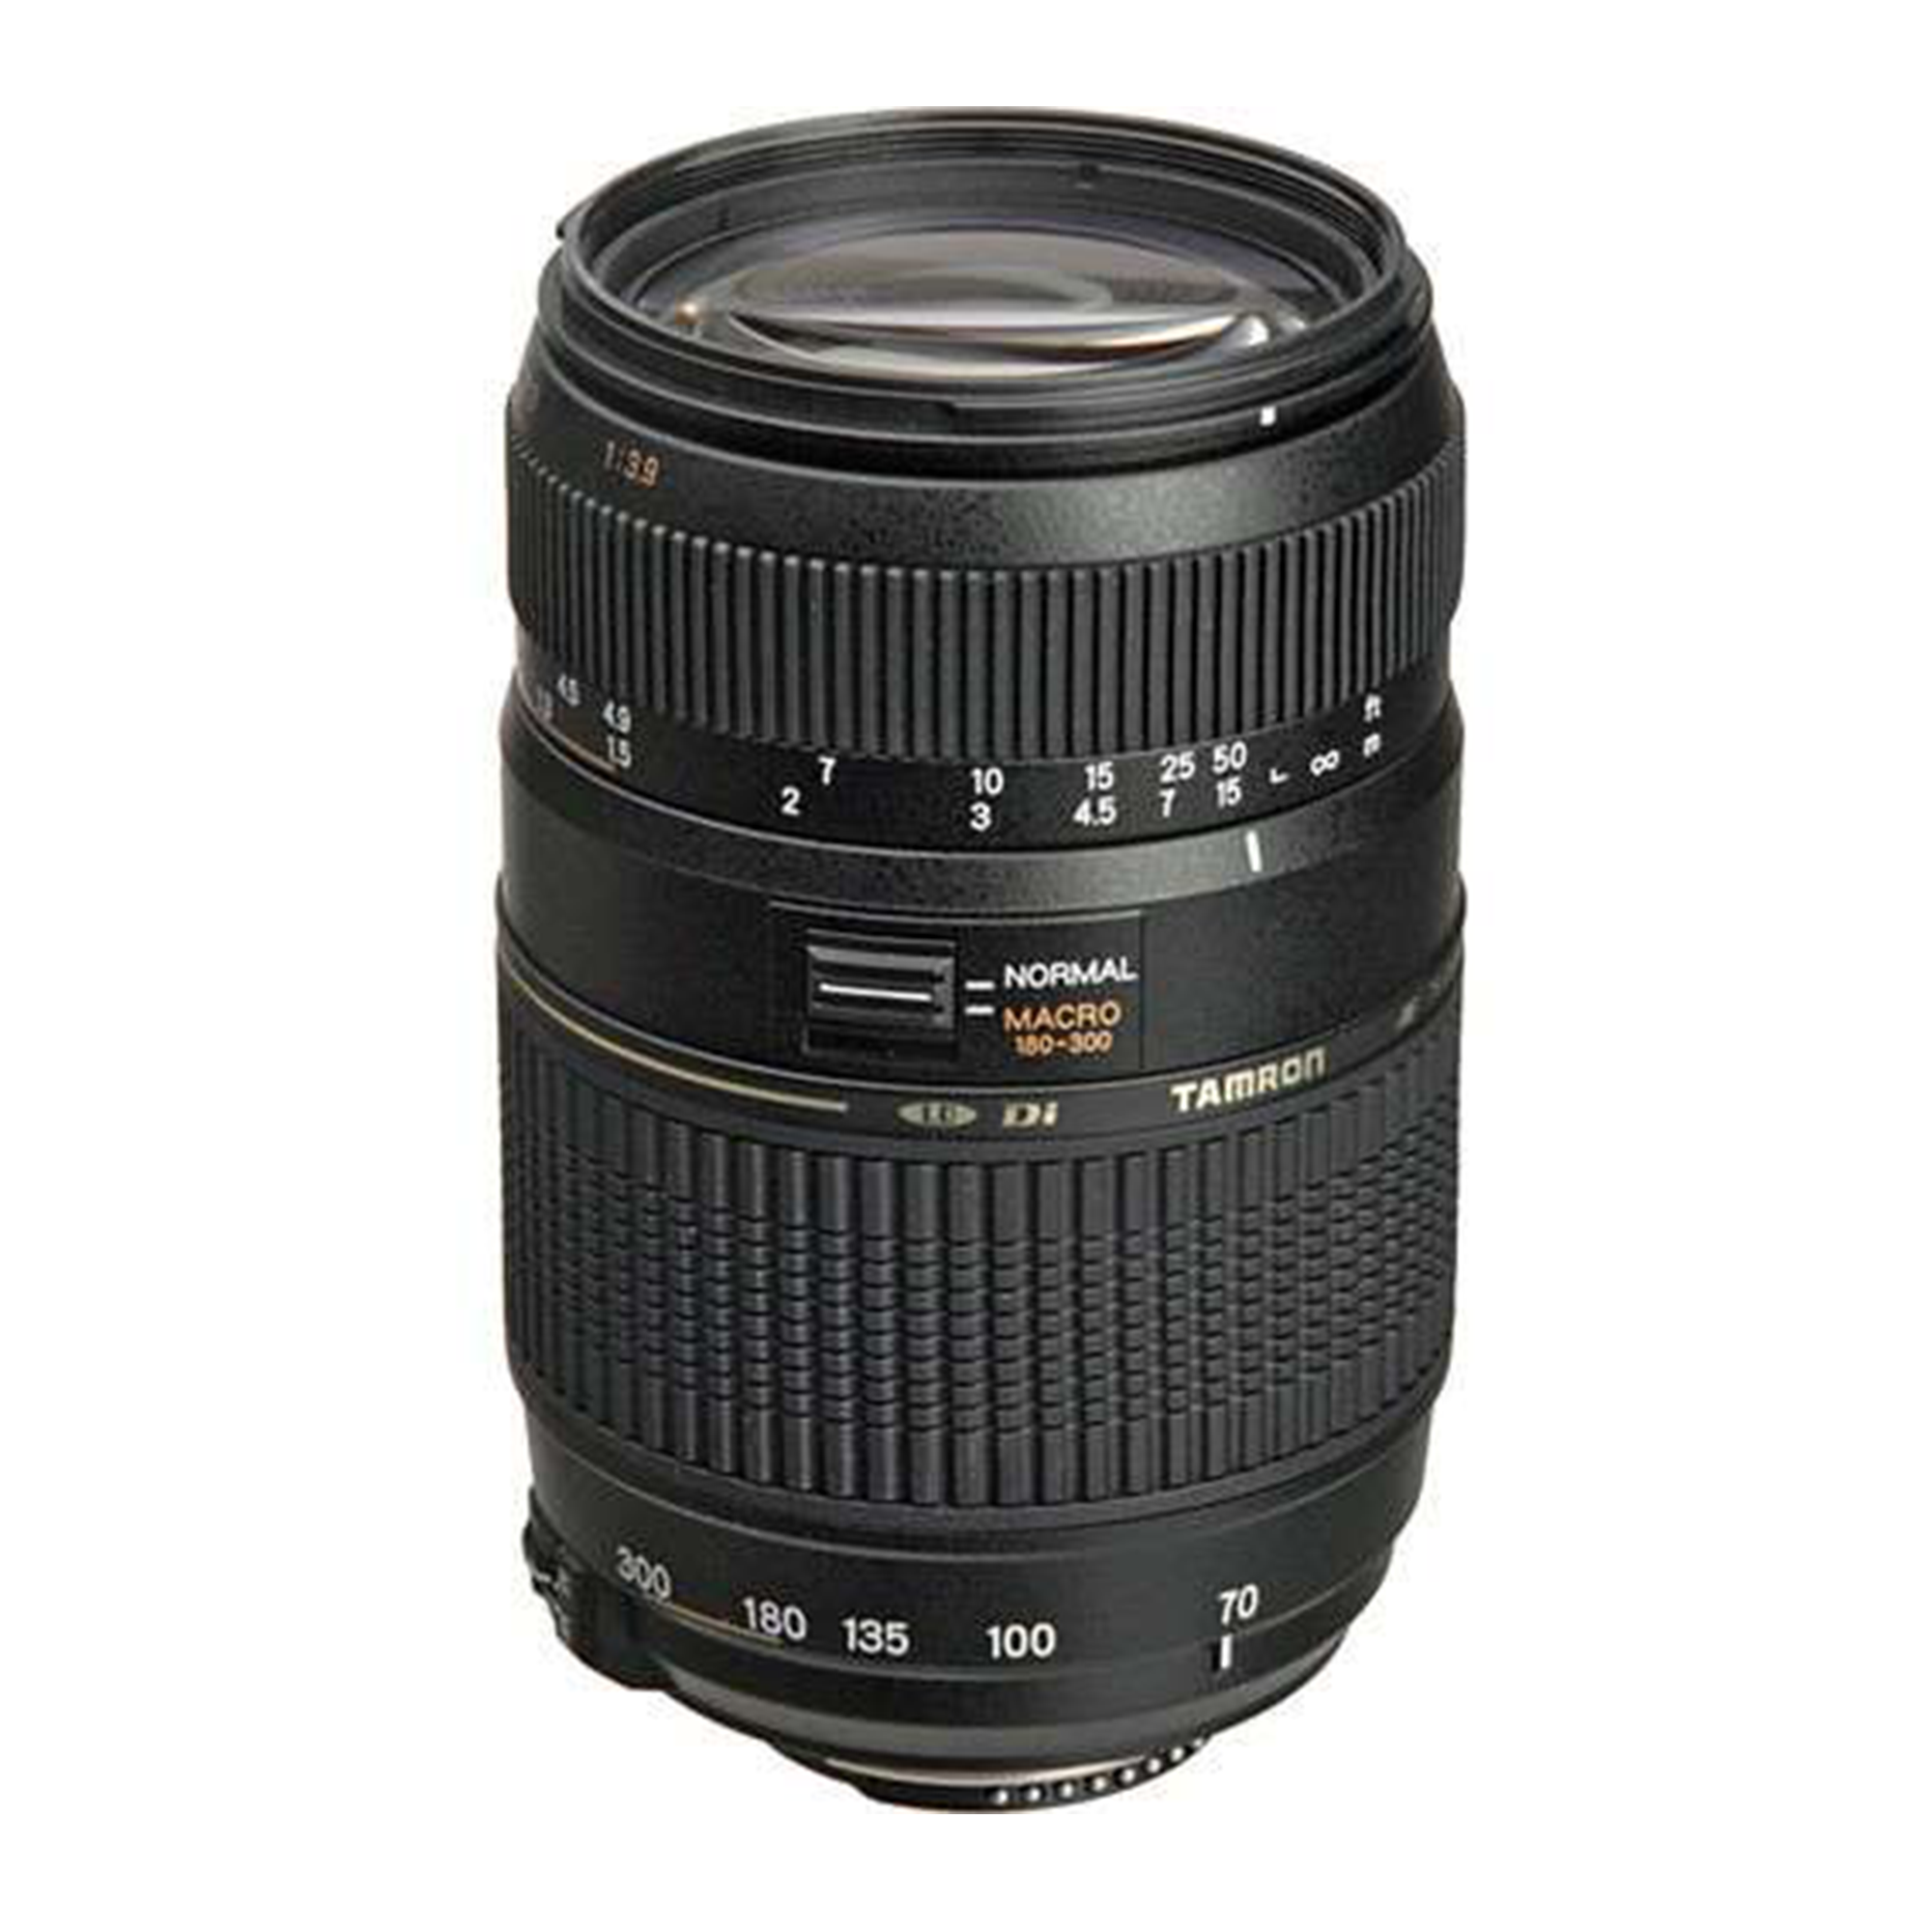 Tamron 70-300mm f/4-5.6 Di LD Macro Autofocus Lens For Canon